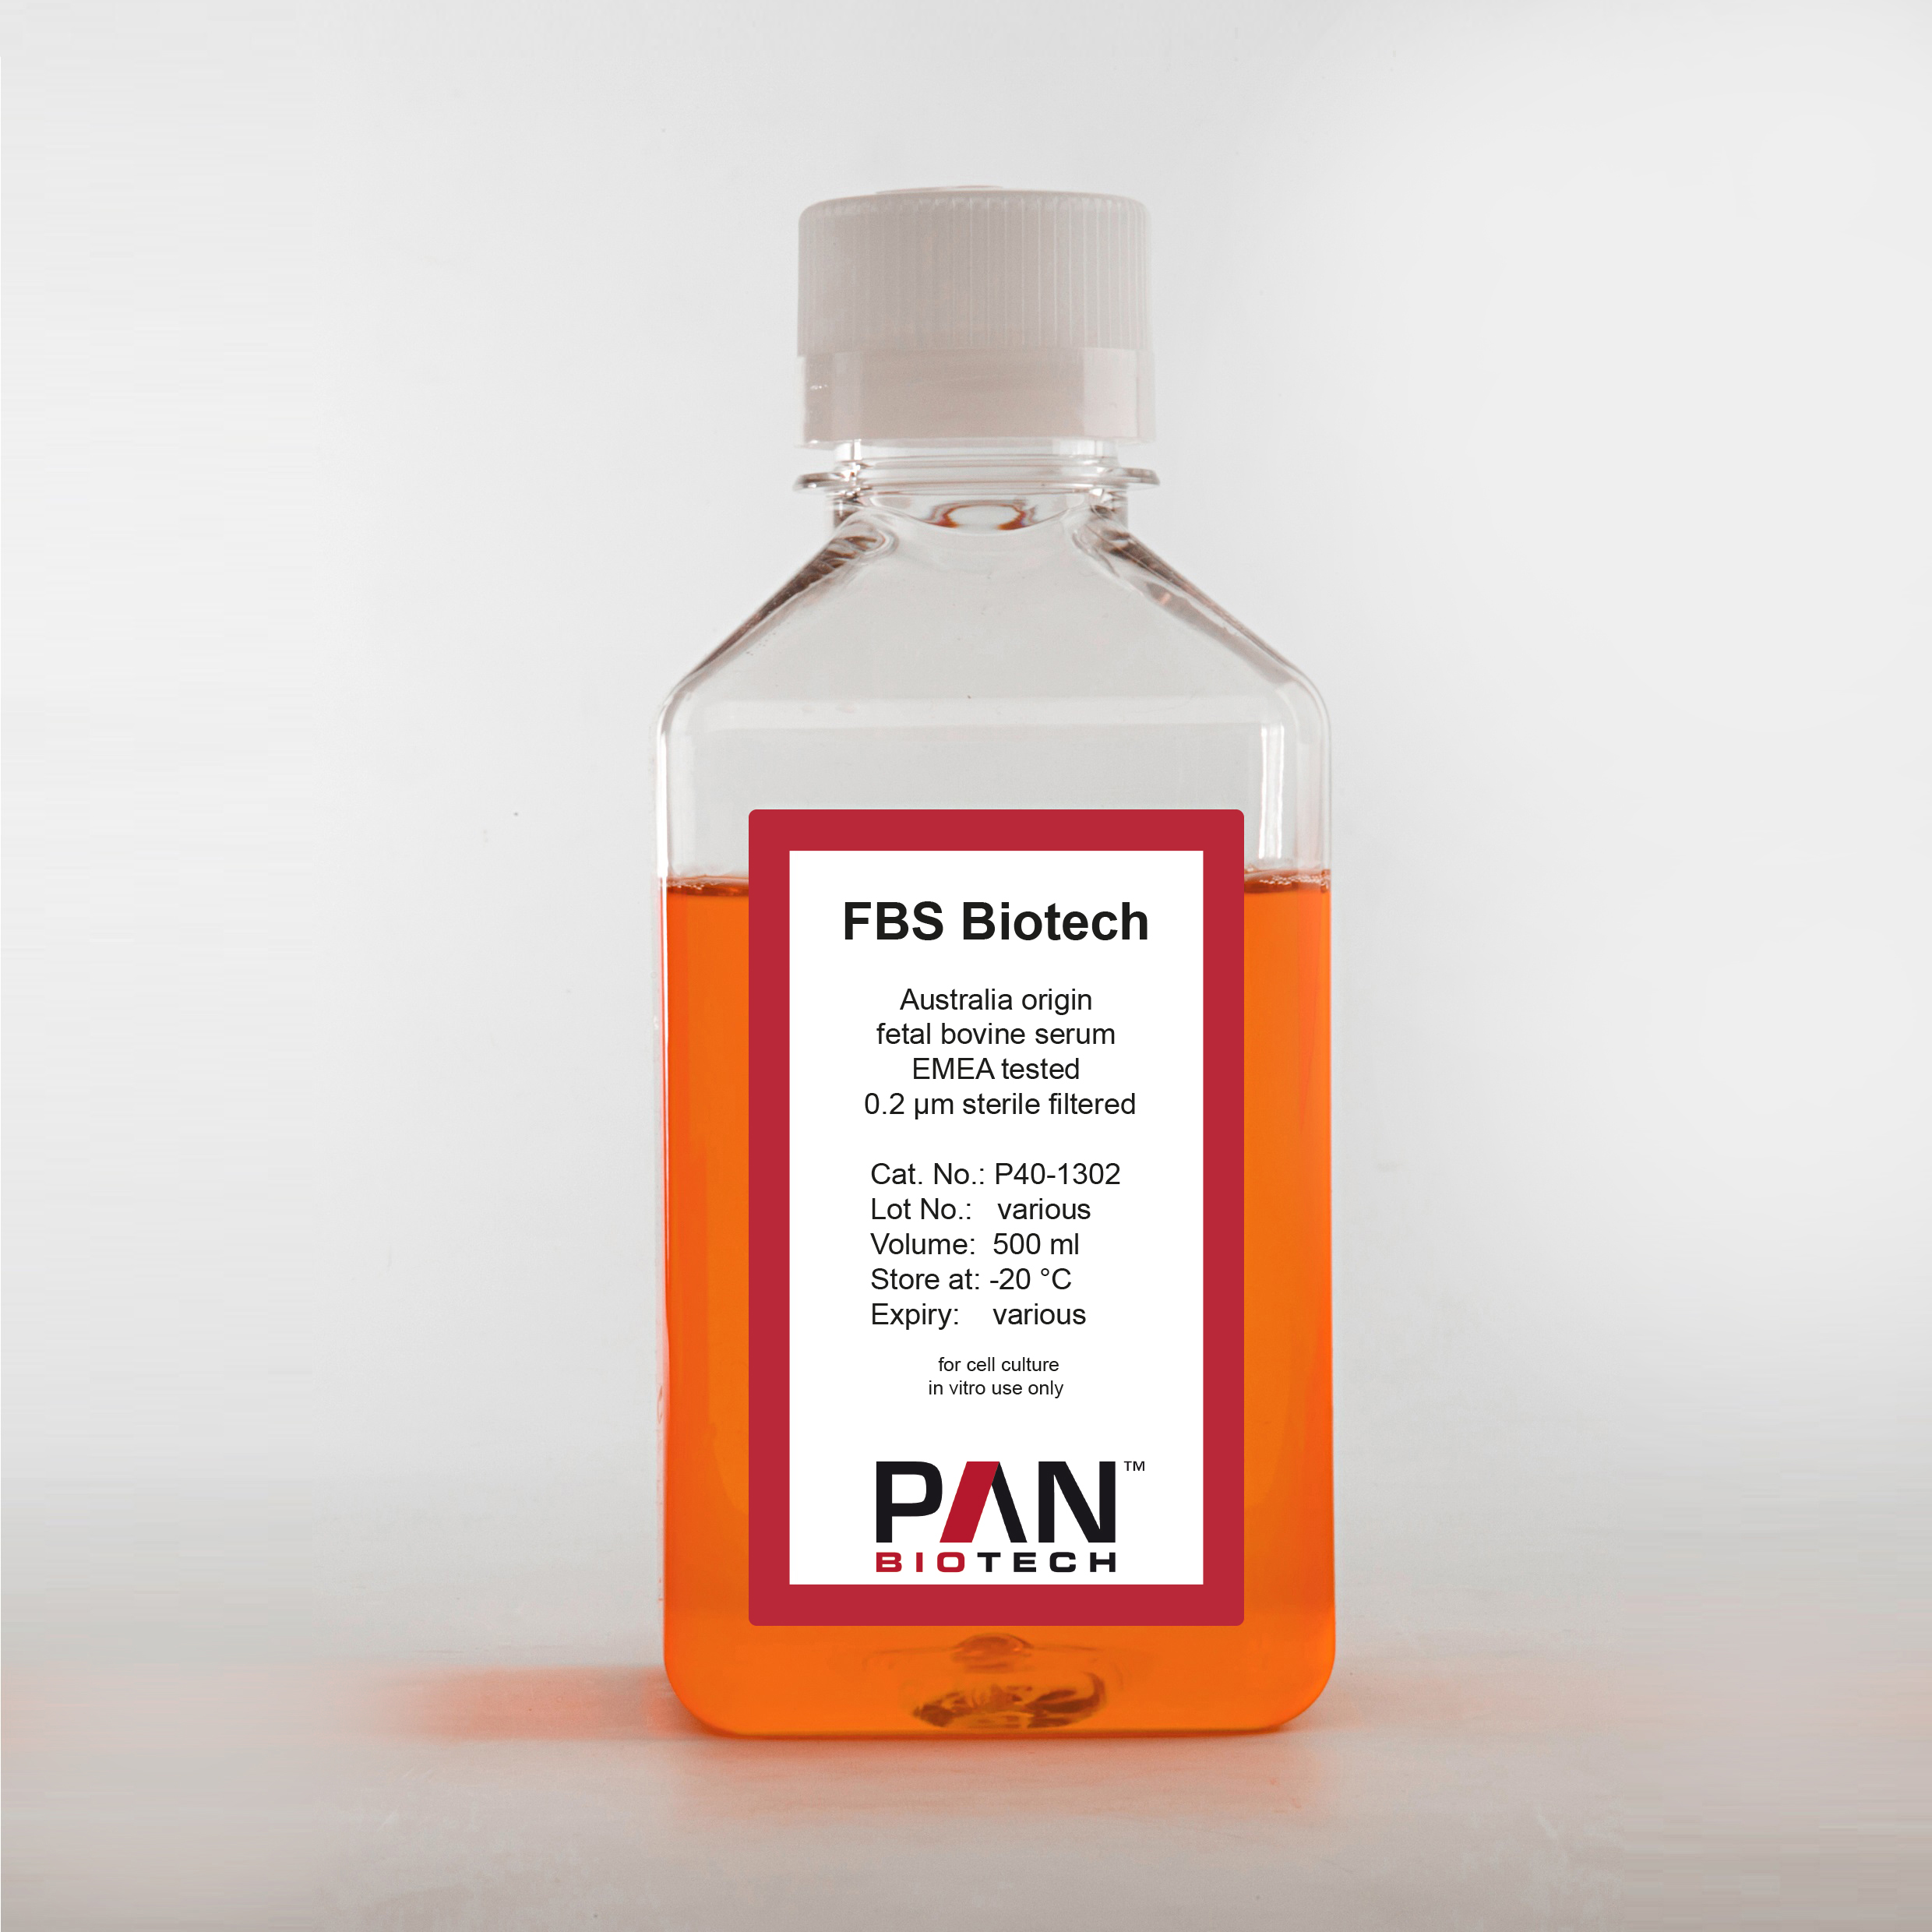 FBS Biotech, Australia origin, fetal bovine serum, tested according EMEA 1793 and Ph. Eur. 2262, 0.2 µm sterile filtered